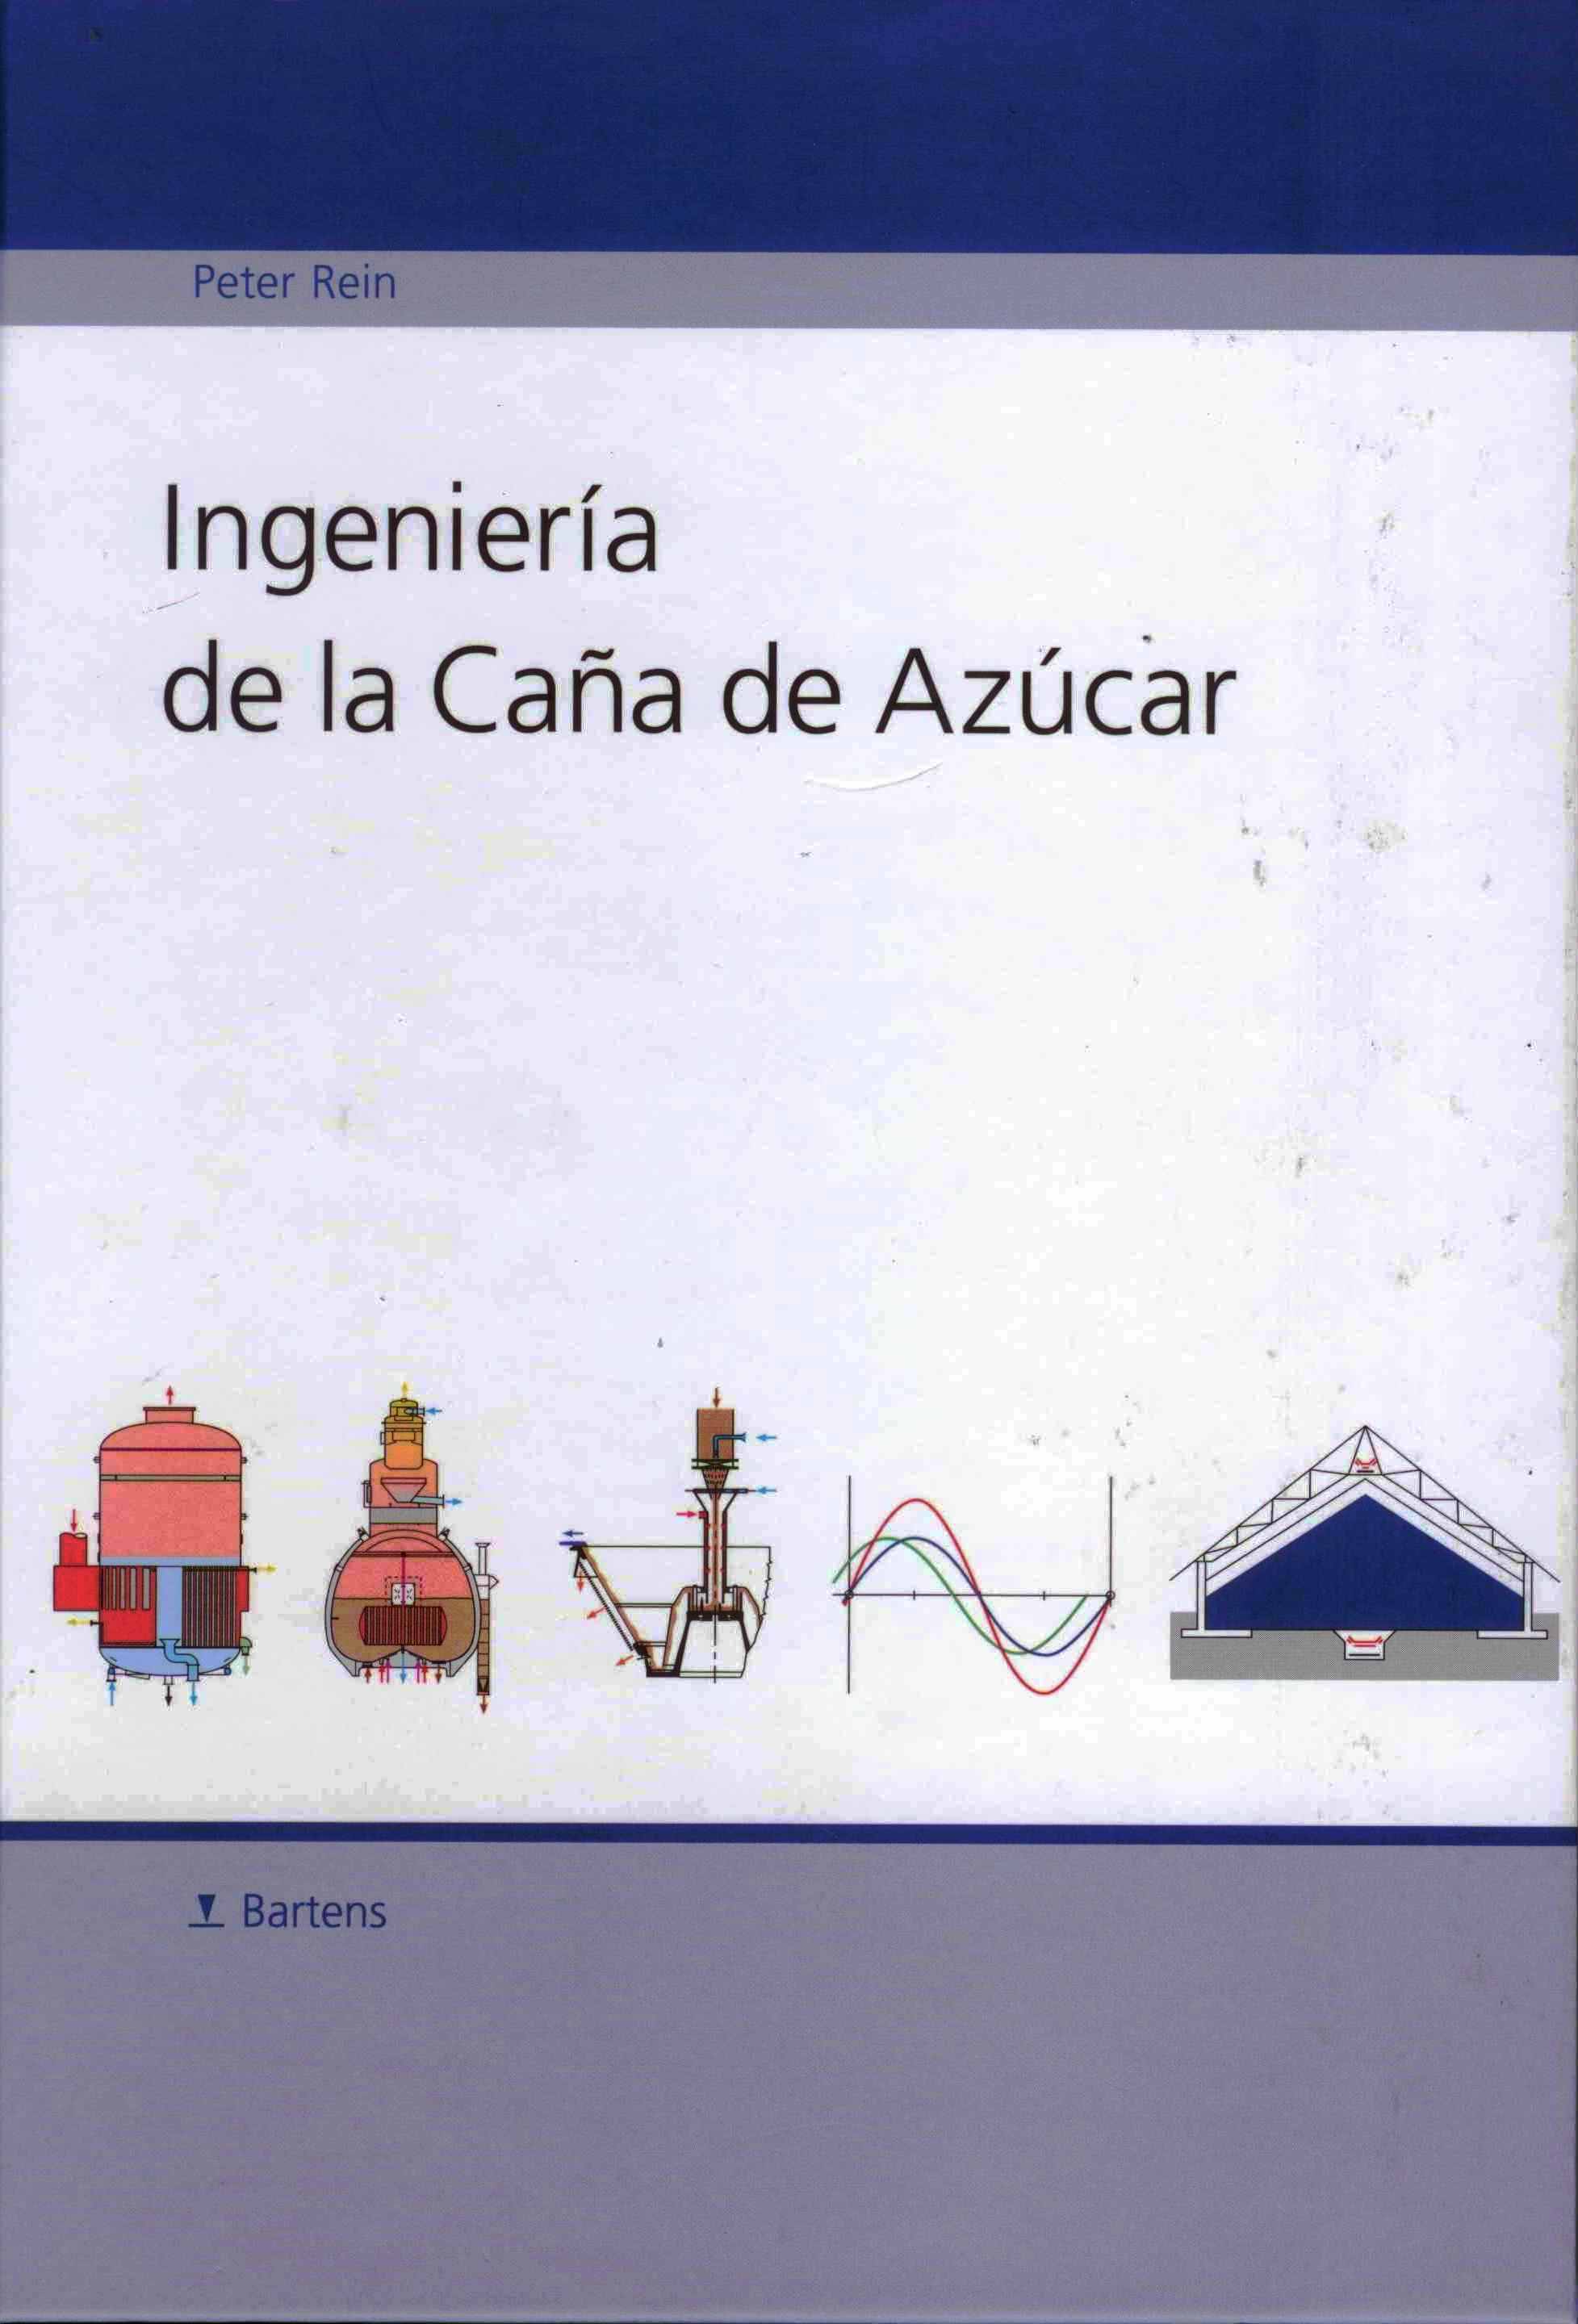 http://www.cenicana.org/investigacion/seica/imagenes_libros/2013/8.jpg